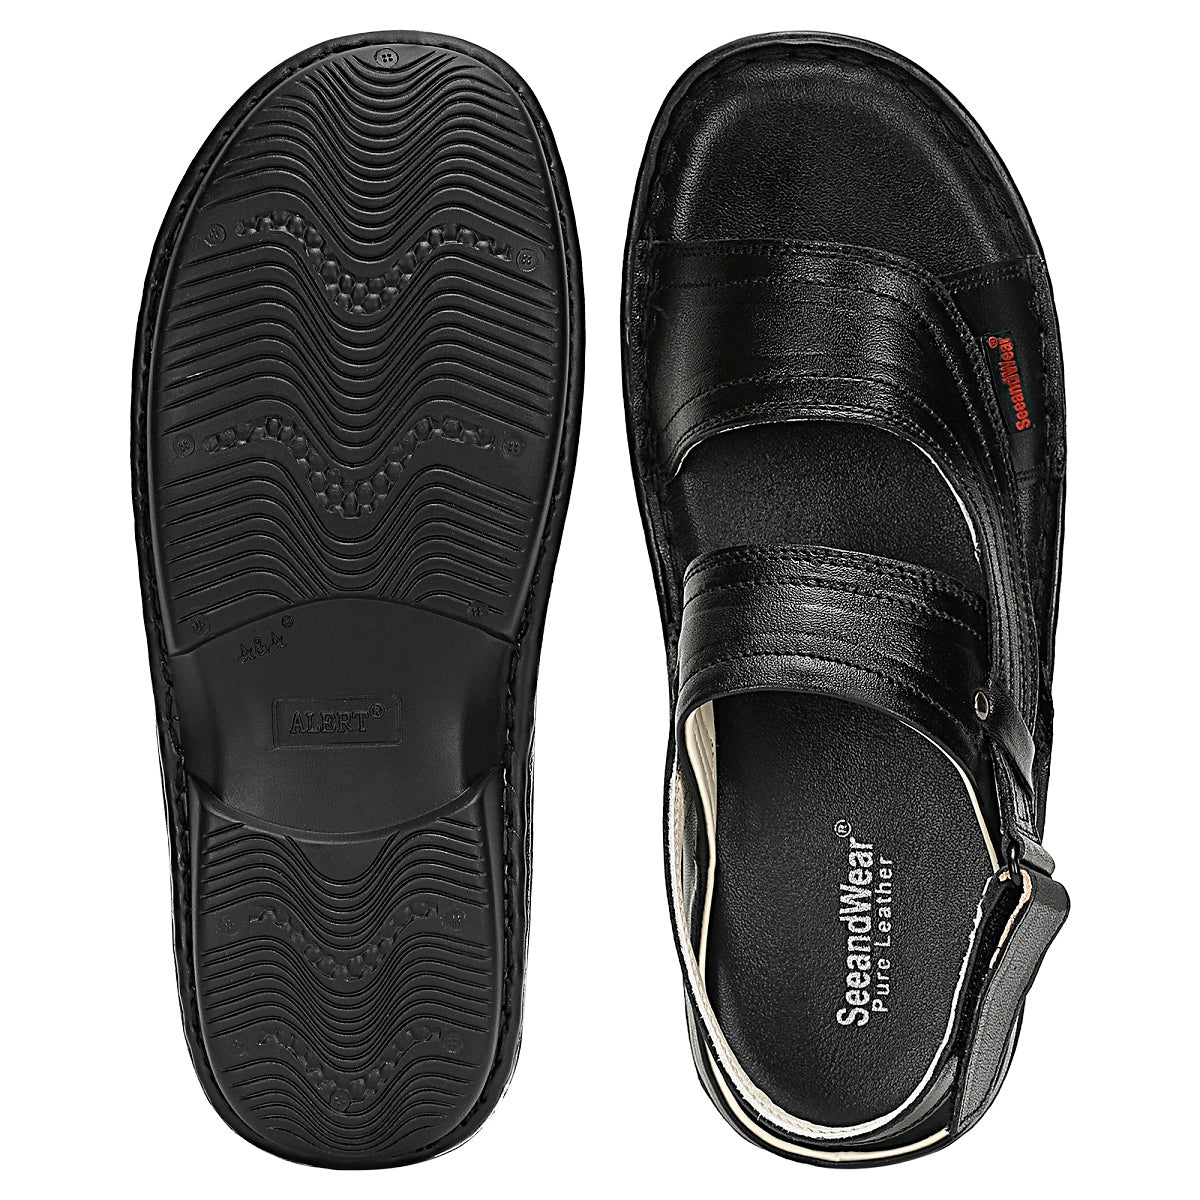 SeeandWea Leather Sandals For Men